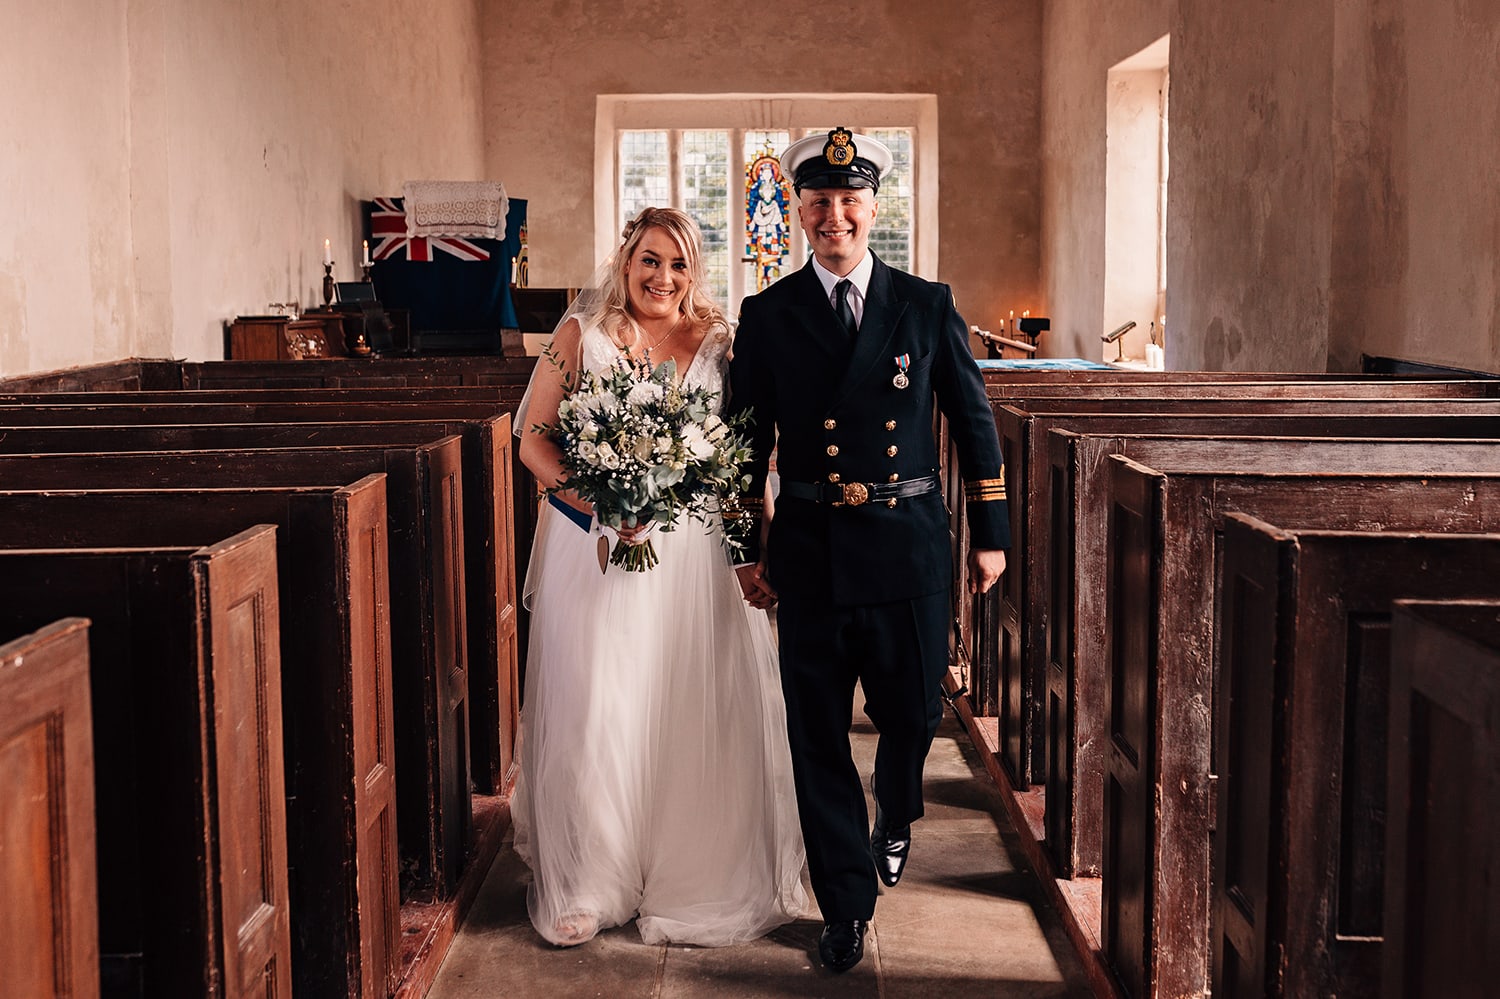 Newlyweds exiting church dressed in wedding gown and Coastguard uniform